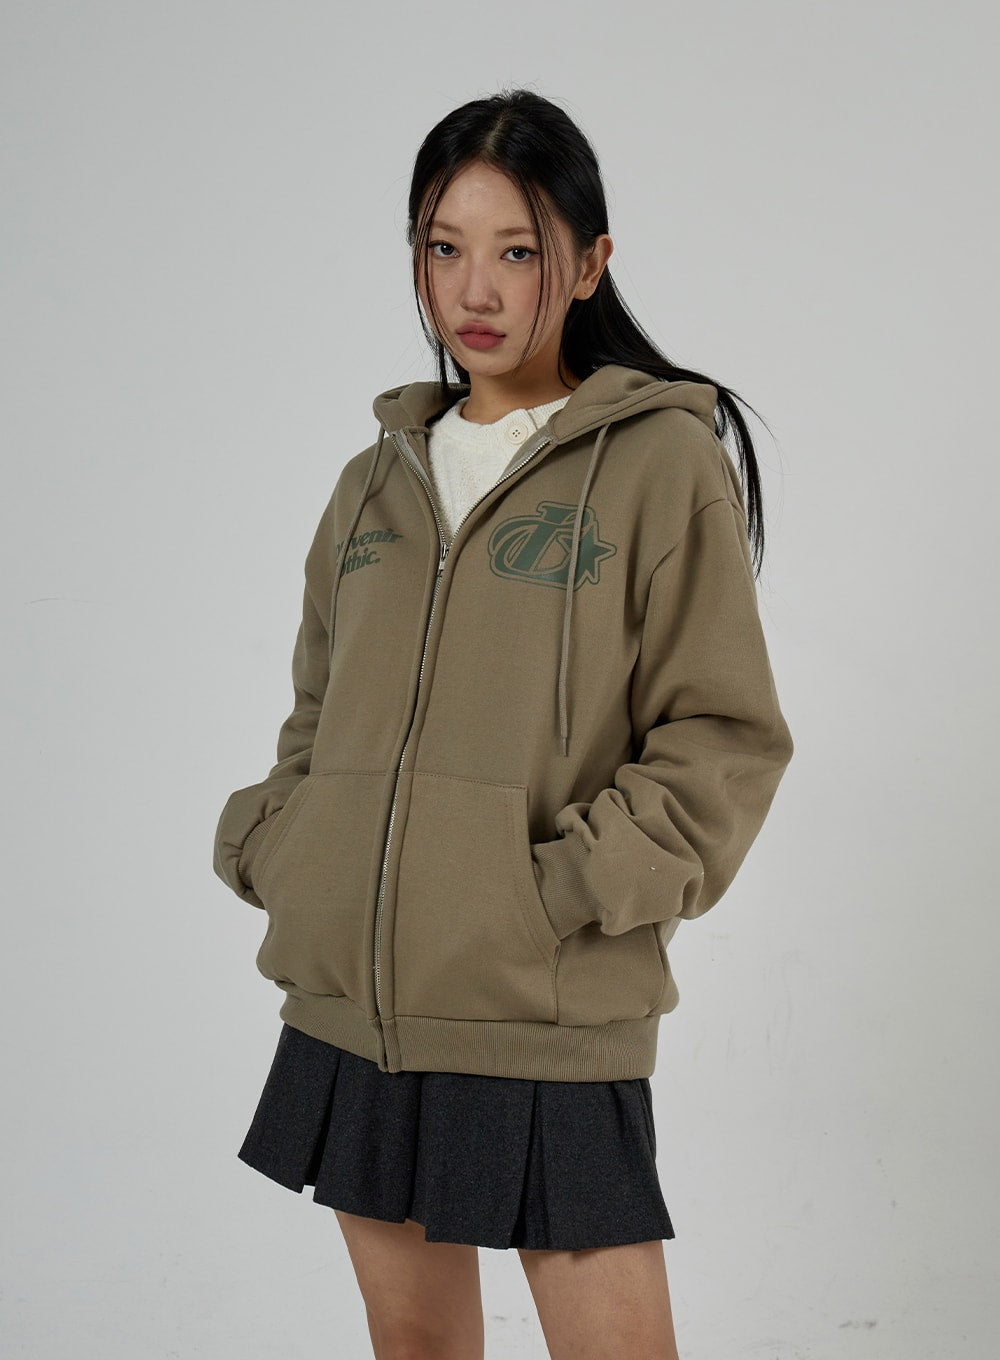 goodnight5to【希少】goodnight5tore bicolor zip hoodie